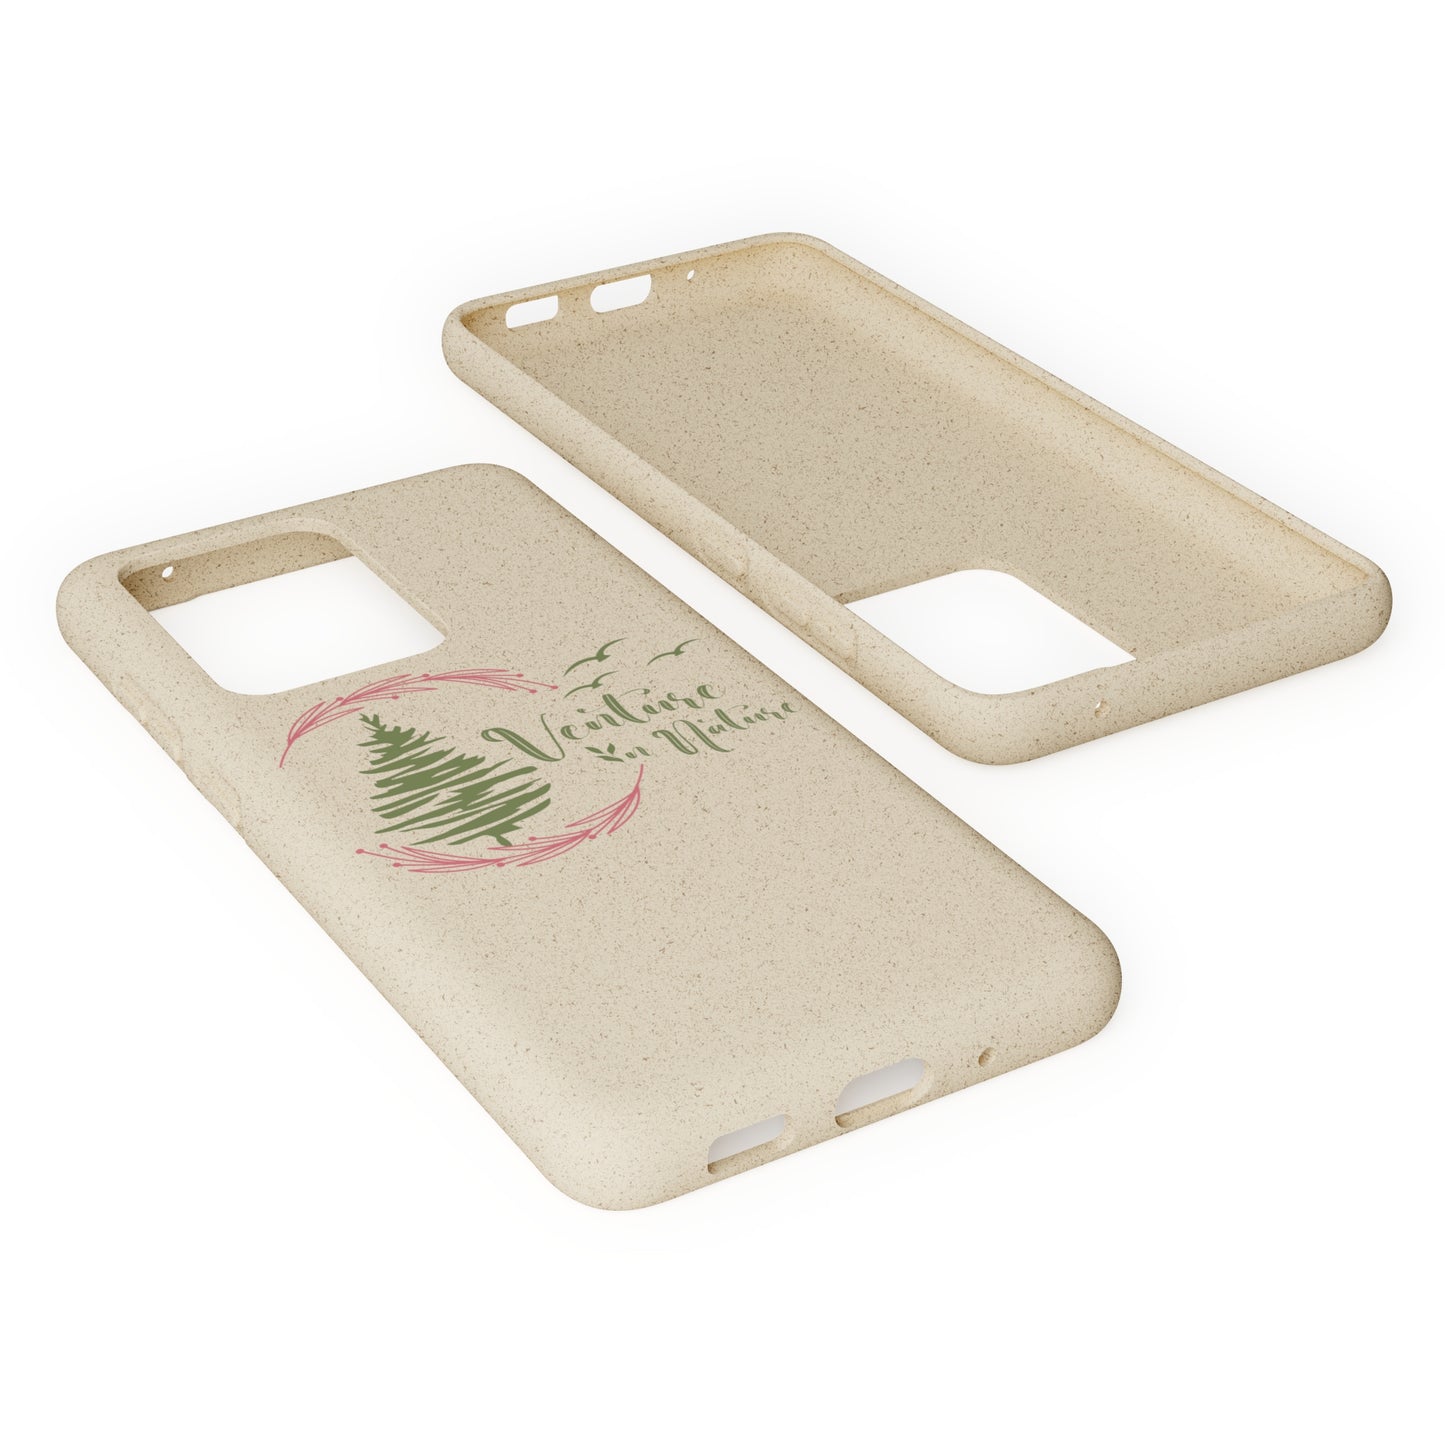 Biodegradable Phone Case (iPhone, Samsung) ~ Venture in Nature